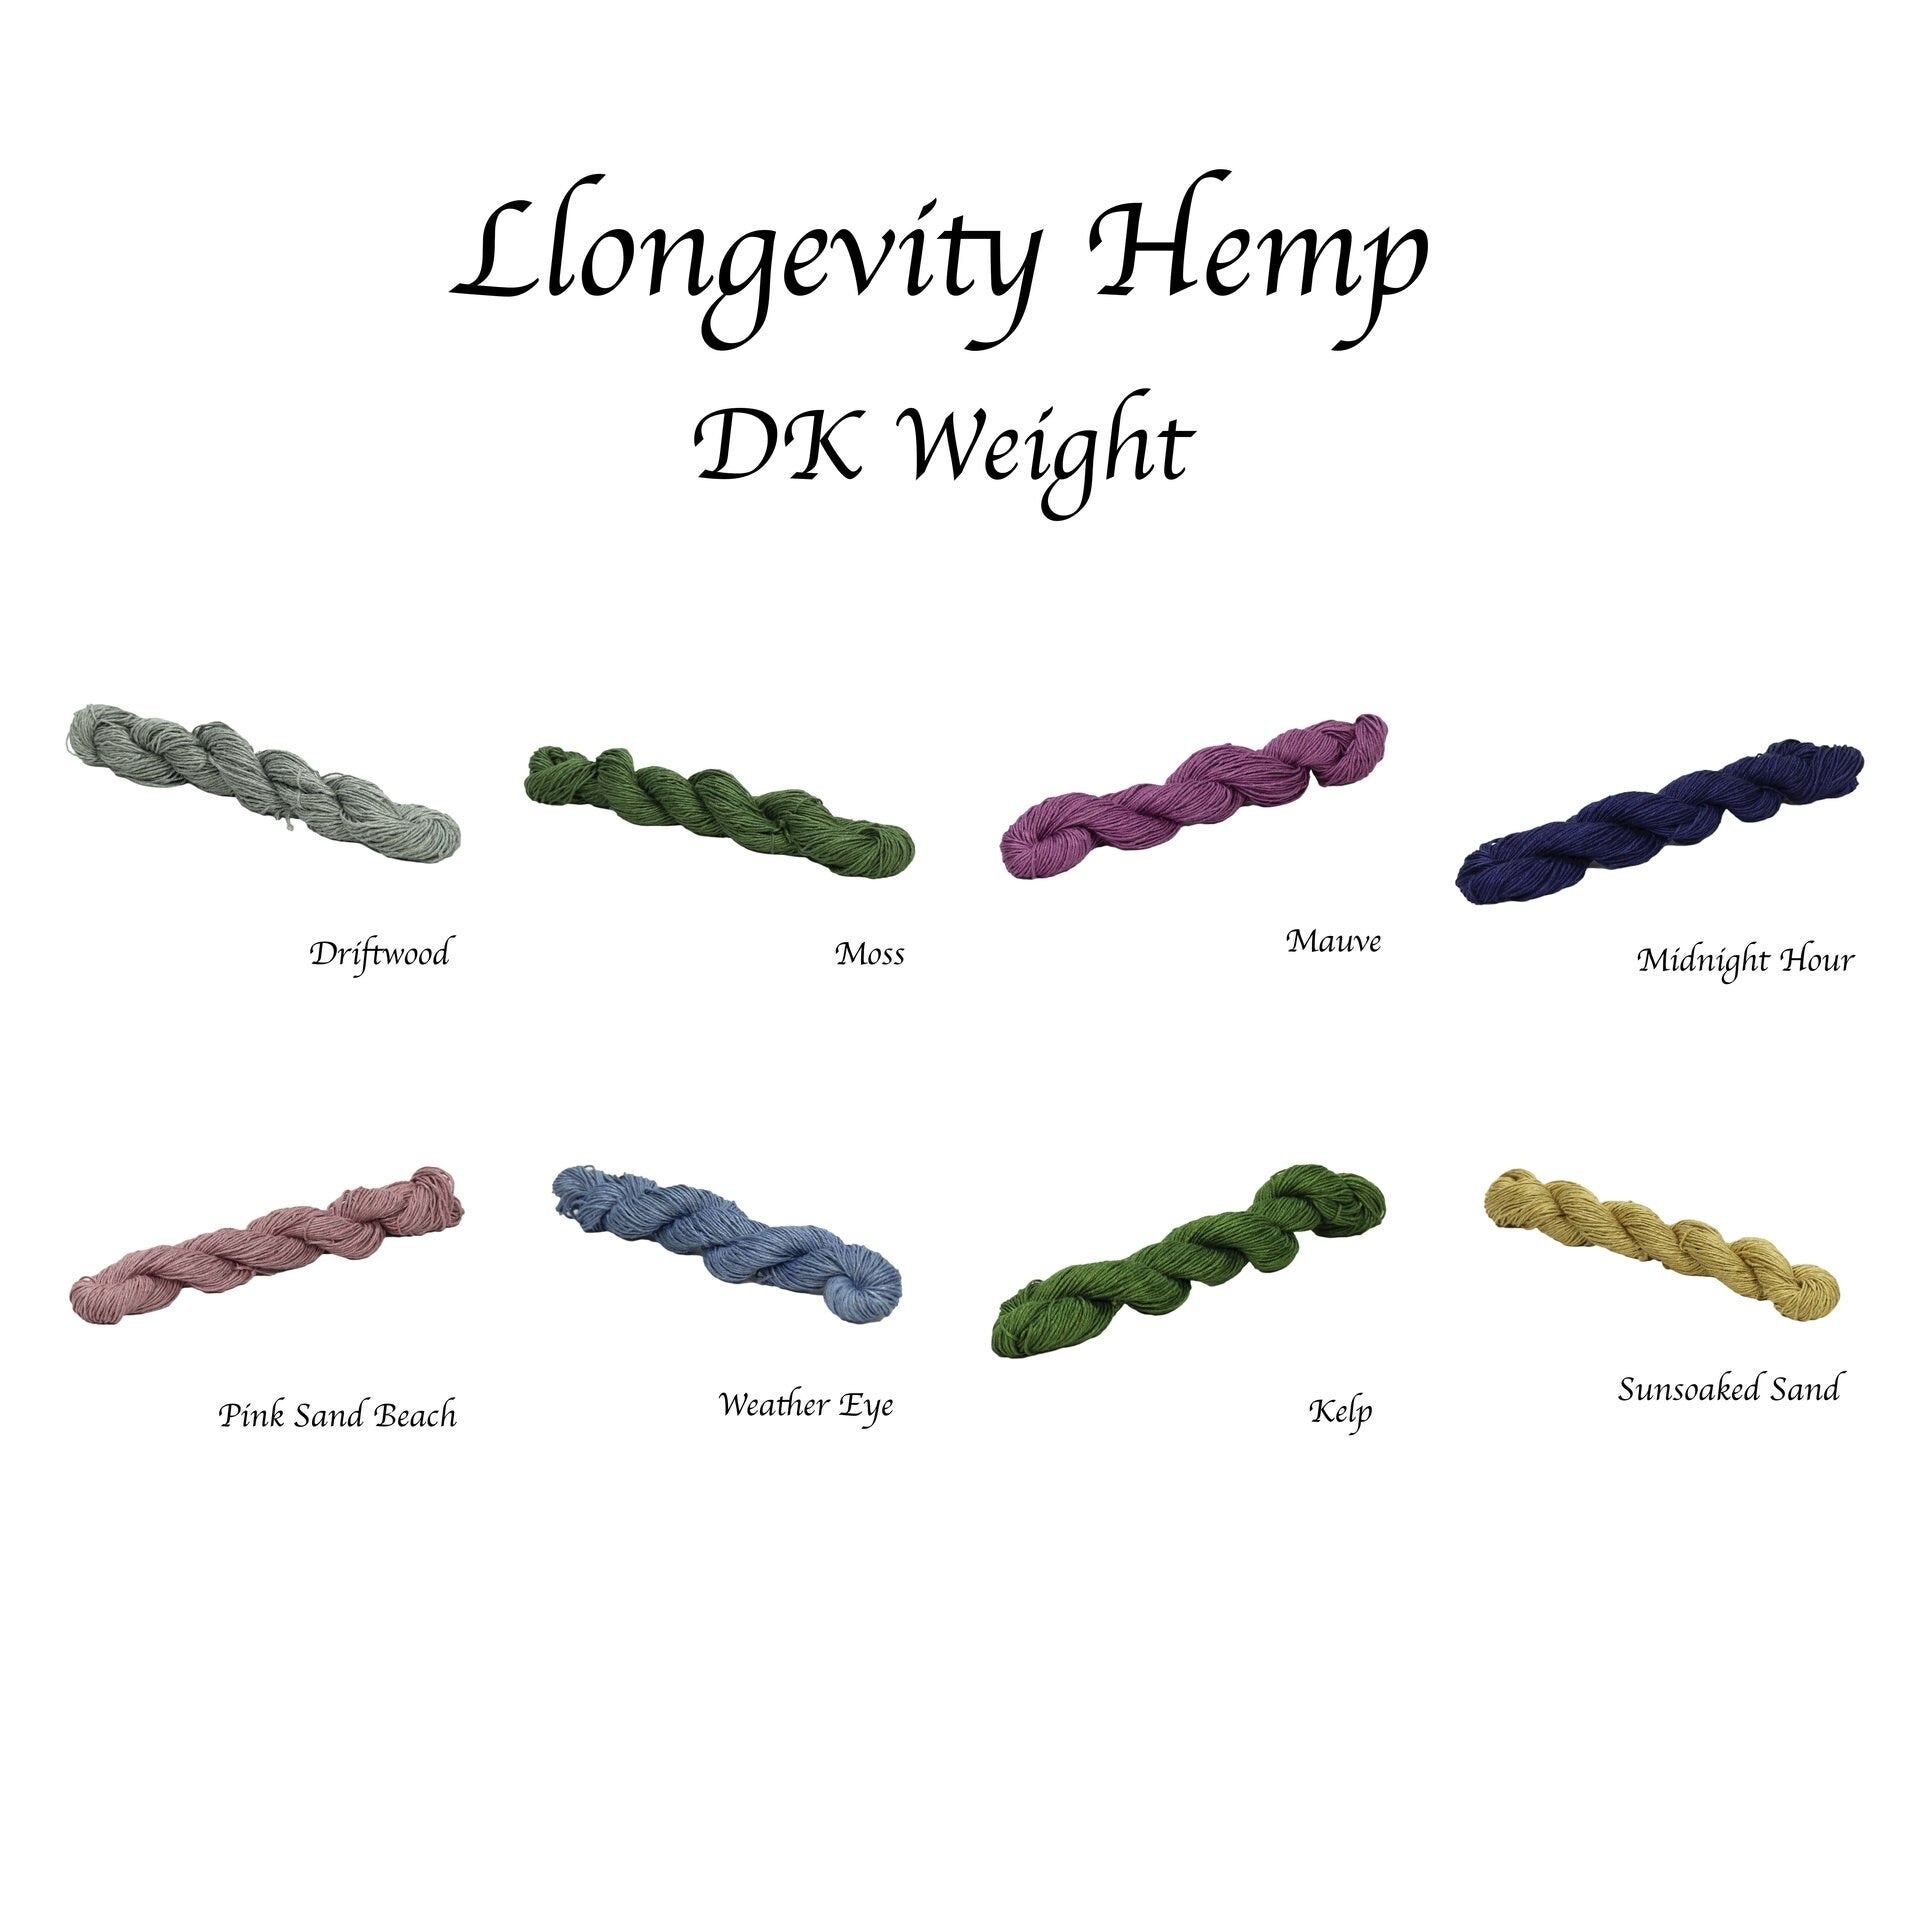 Llongevity Hemp 6-Ply DK Weight Yarn